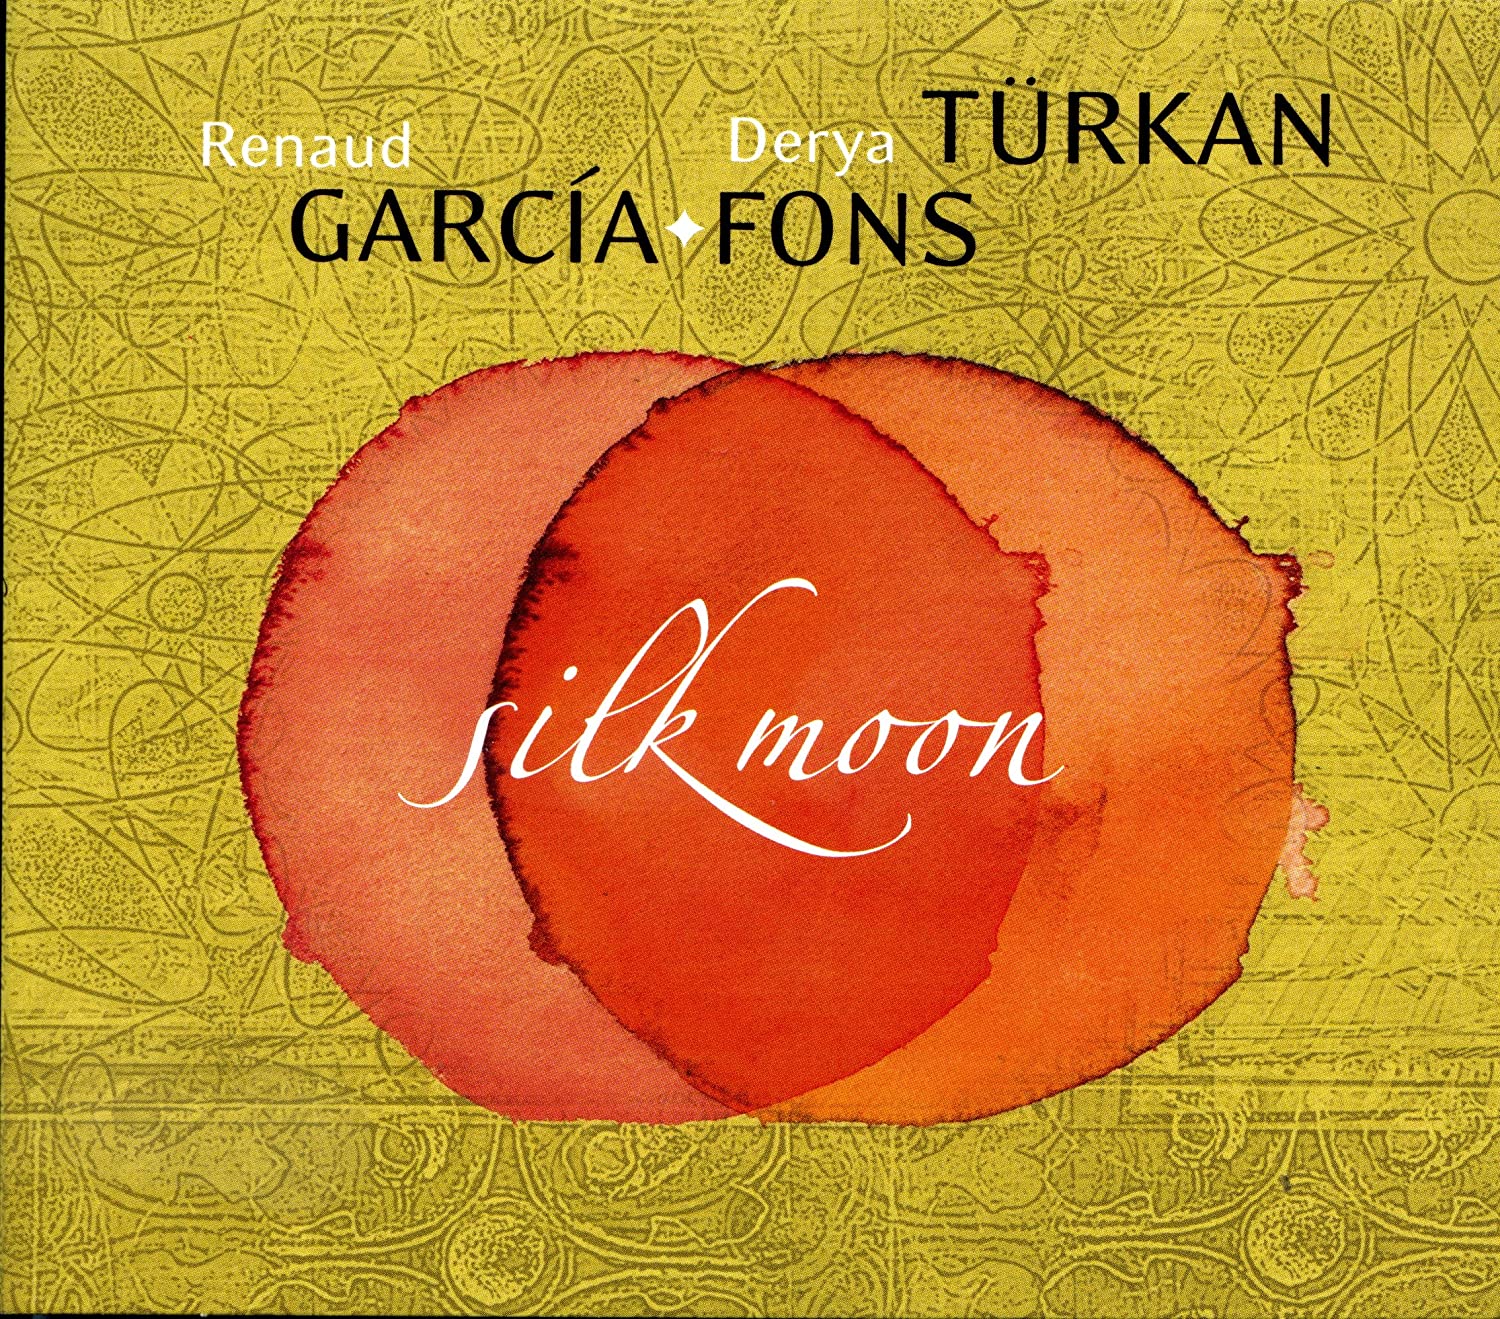 Renaud Garcia-Fons, Derya Türkan Silk Moon